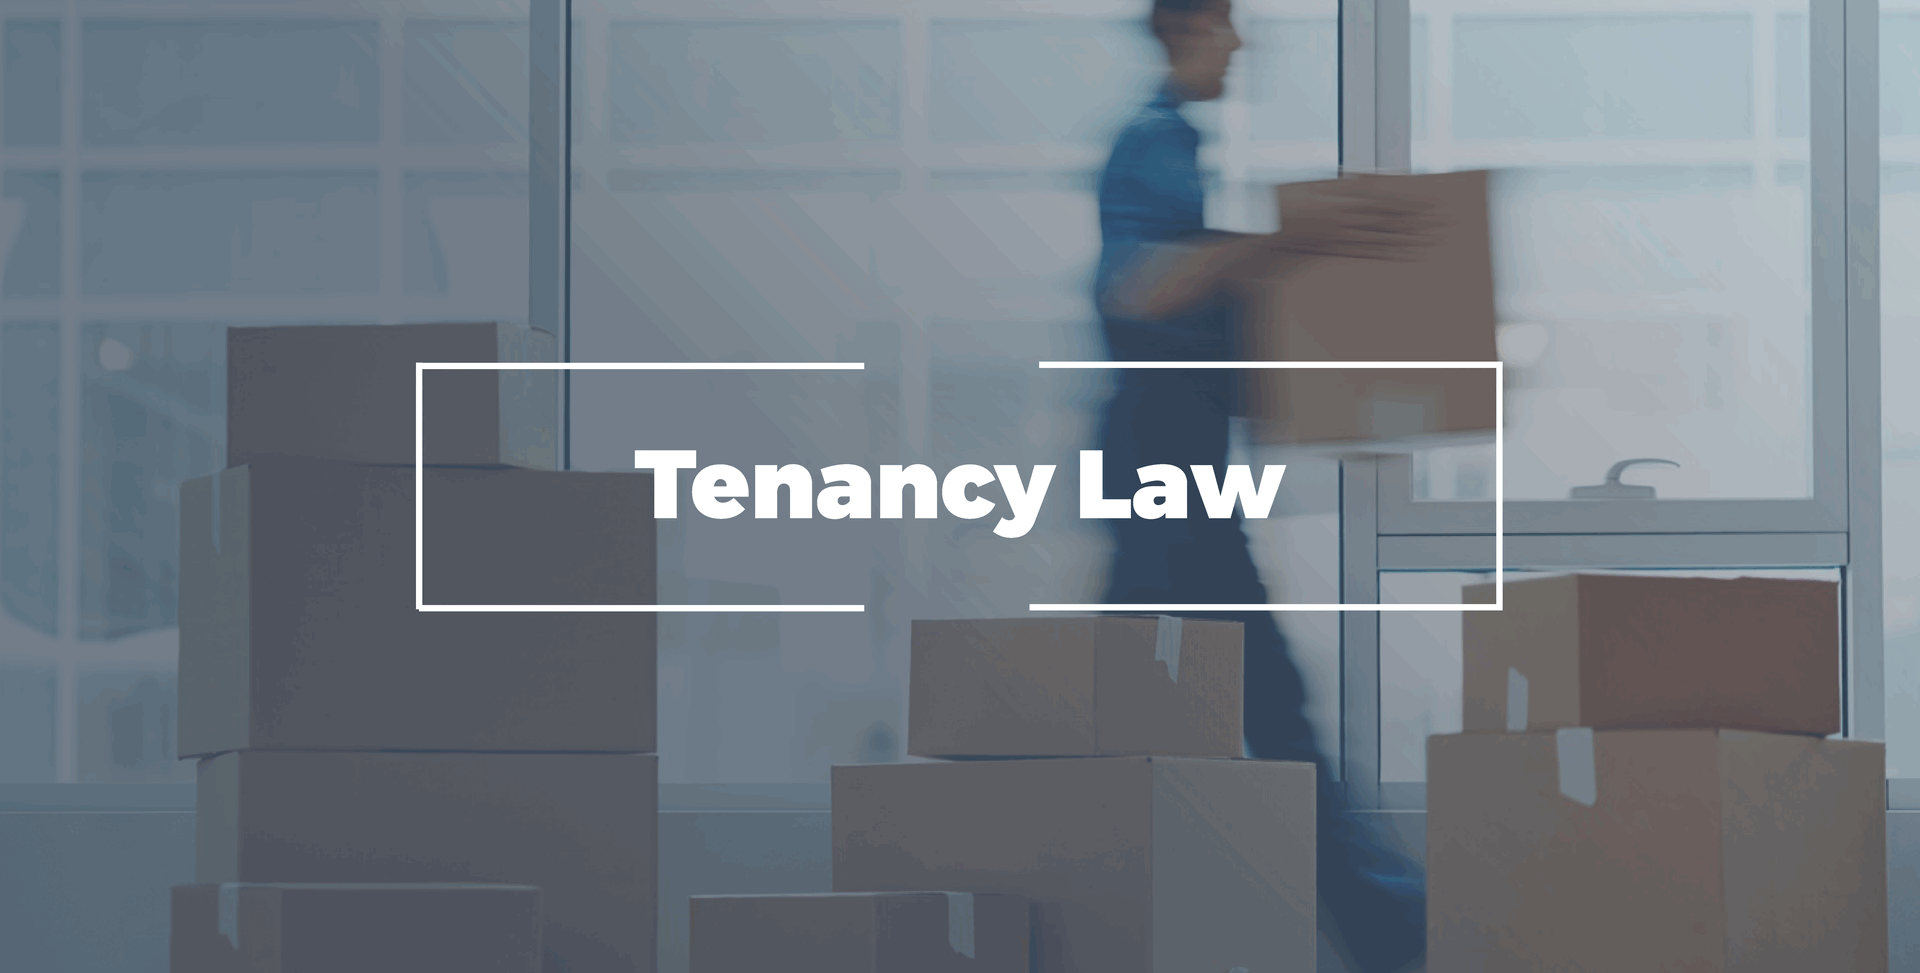 Tenancy law